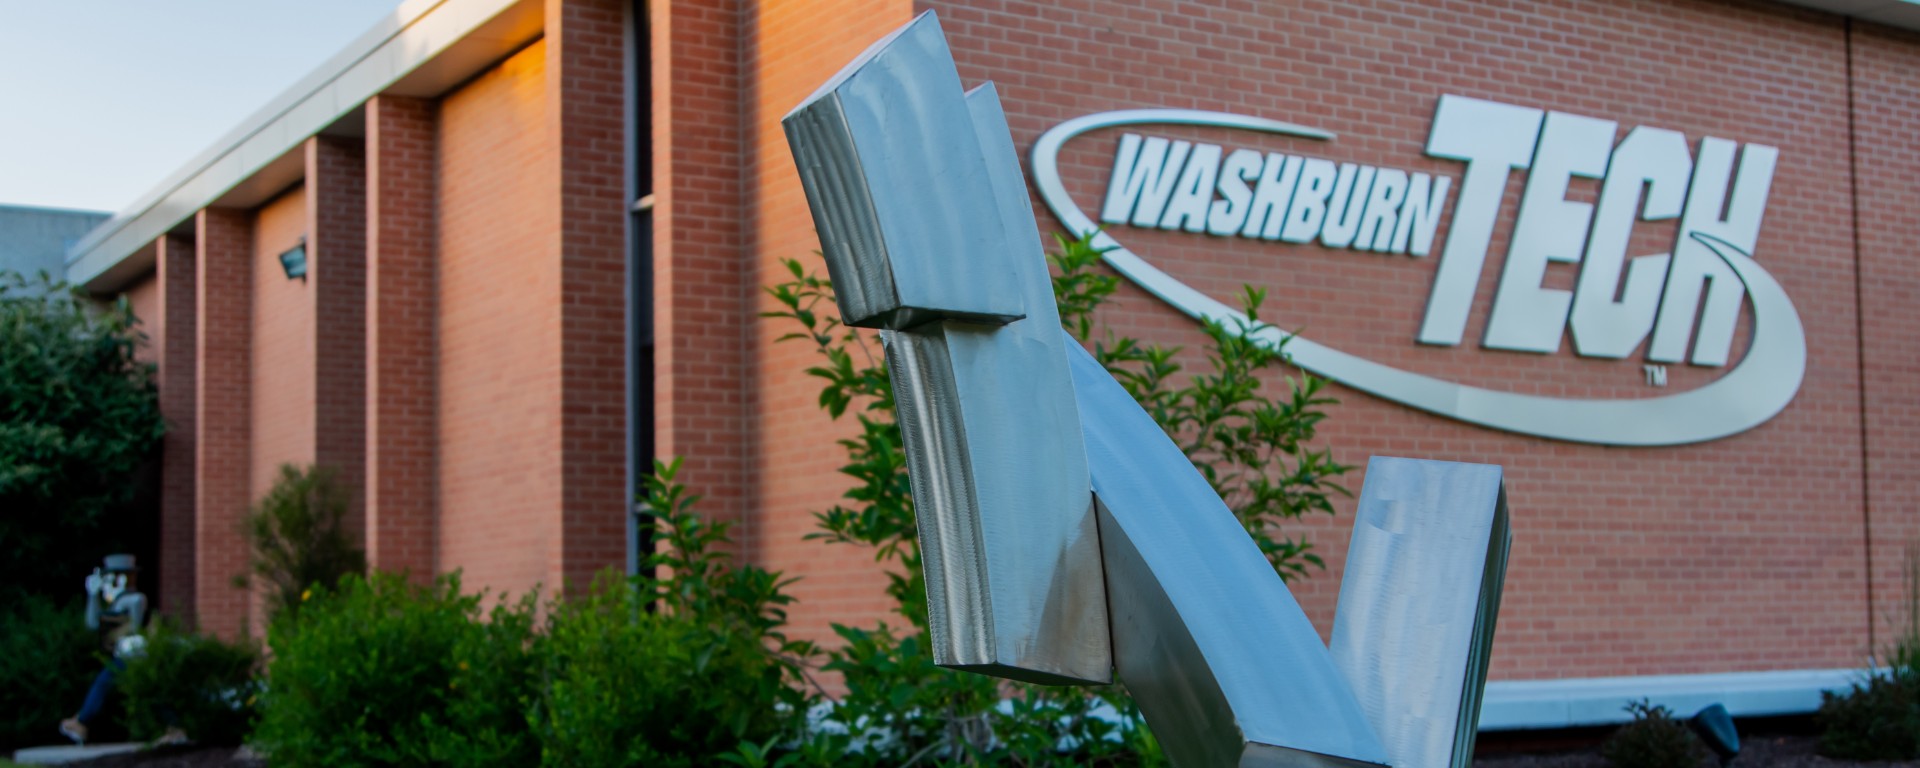 Washburn tech logo on building A